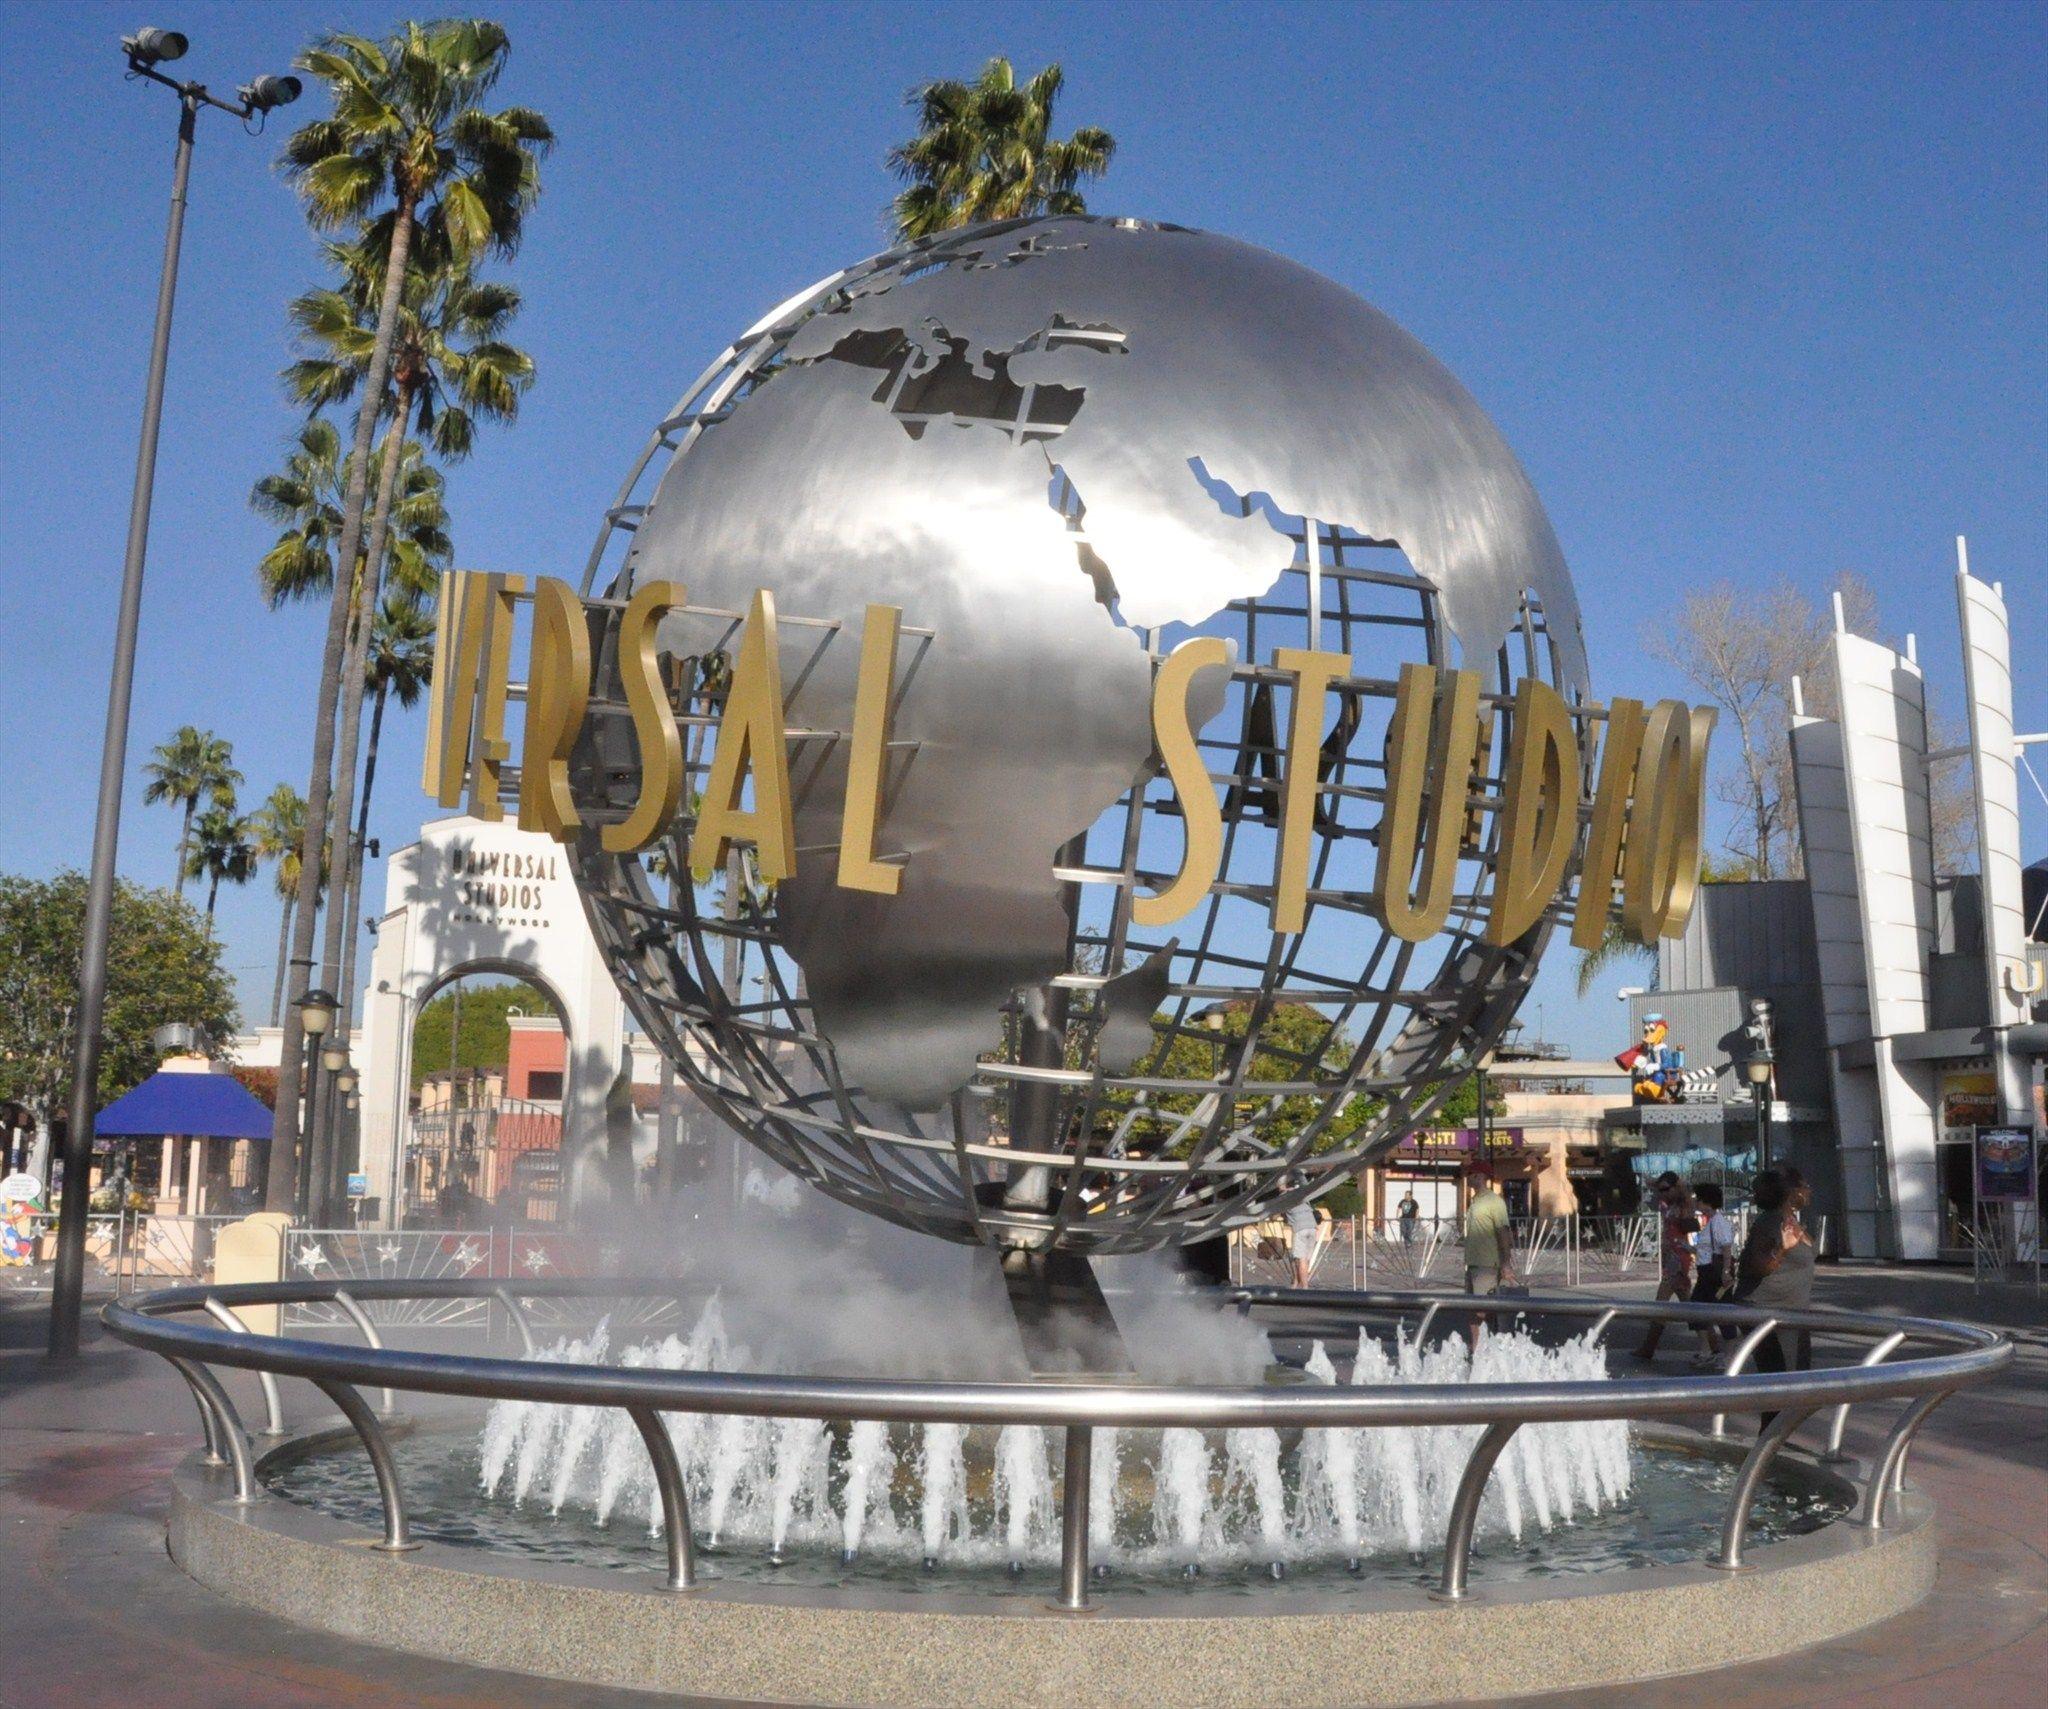 Голливудские киностудии. Юниверсал Лос Анджелес. Парк Юниверсал в Лос Анджелесе. Юниверсал студио в Лос-Анджелесе. Студия Юниверсал, Лос-Анджелес (Universal Studios Hollywood).